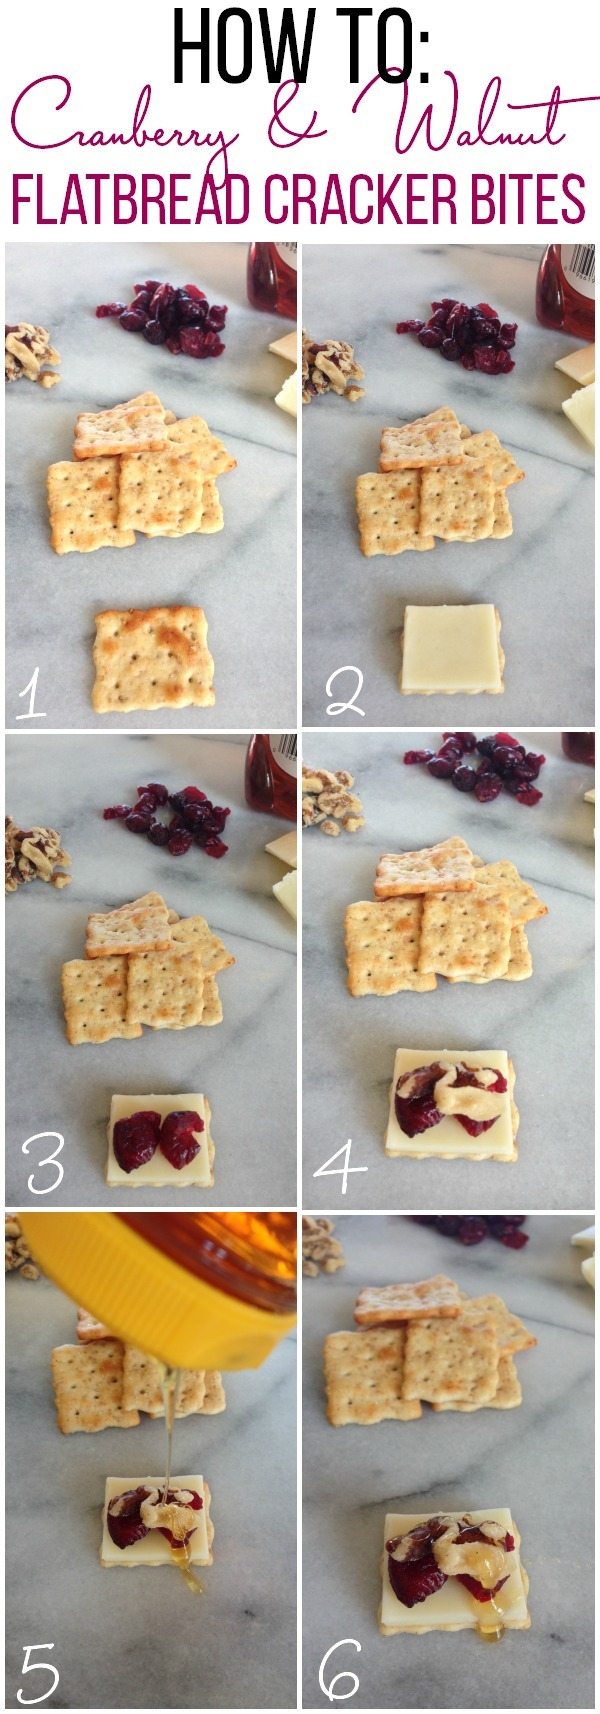 How to make Flatbread Cracker Bites